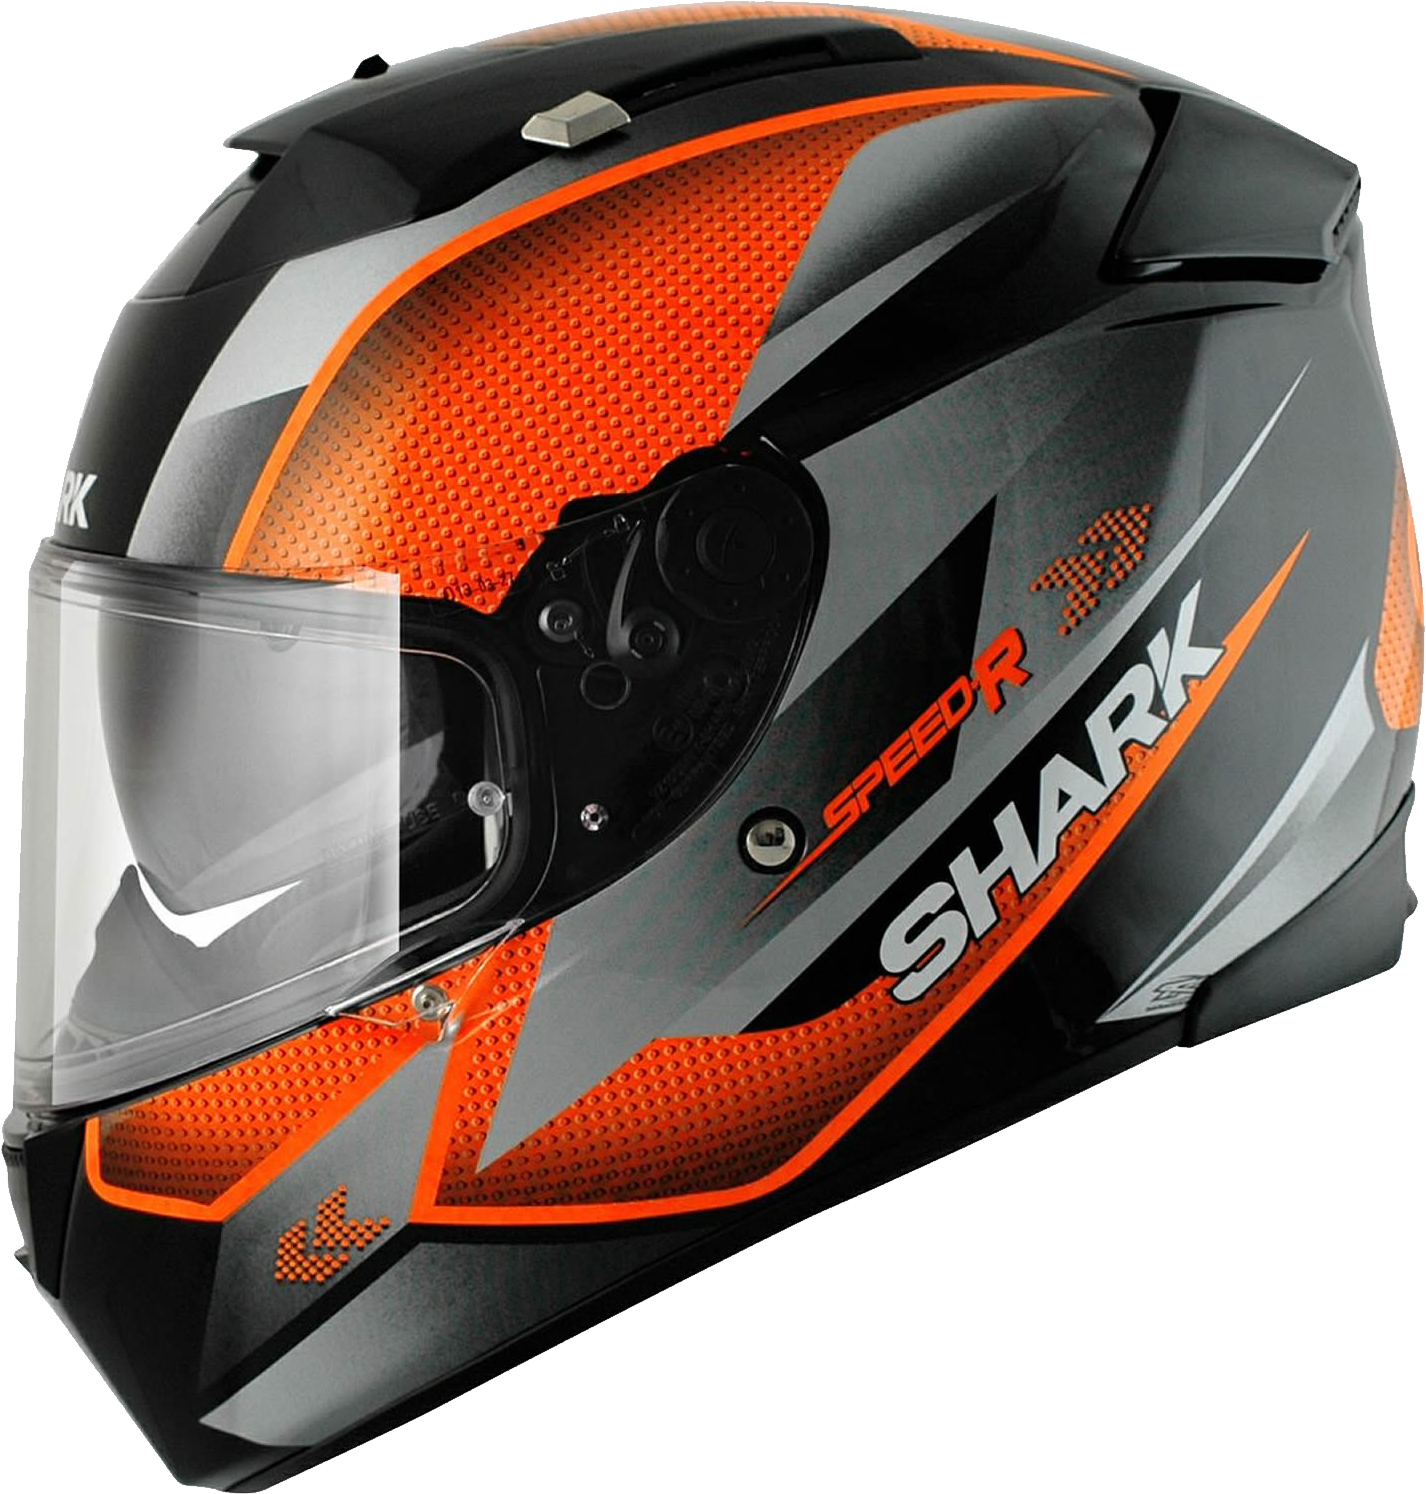 Sports Motorcycle Helmet Transparent Image